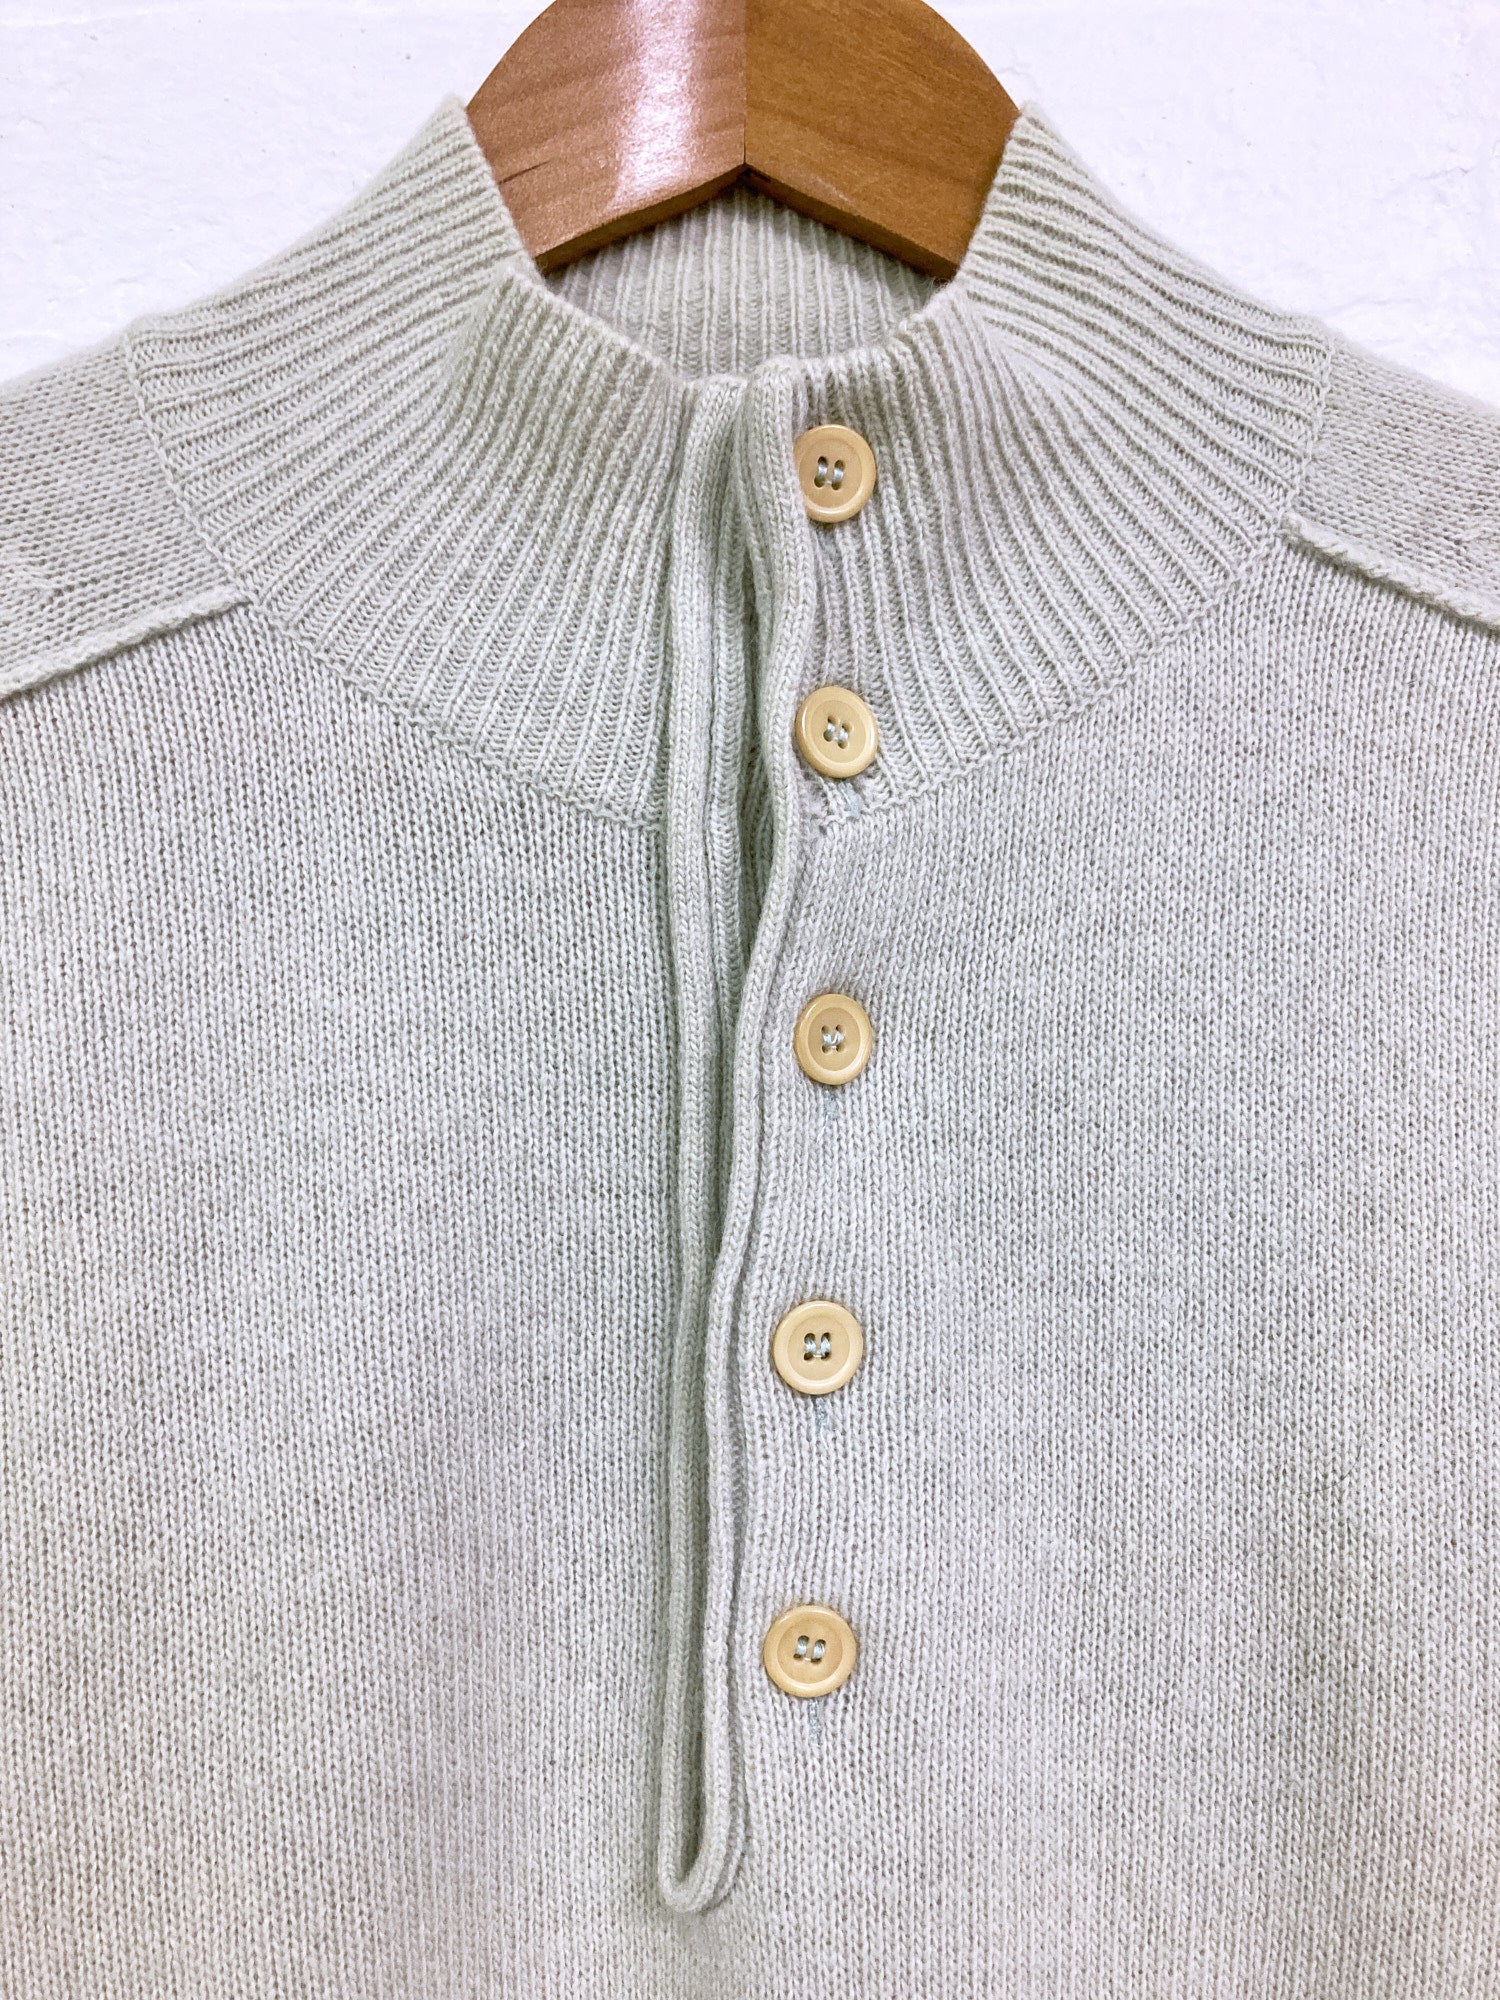 Jean Colonna light dusty green wool buttoned neck jumper - S